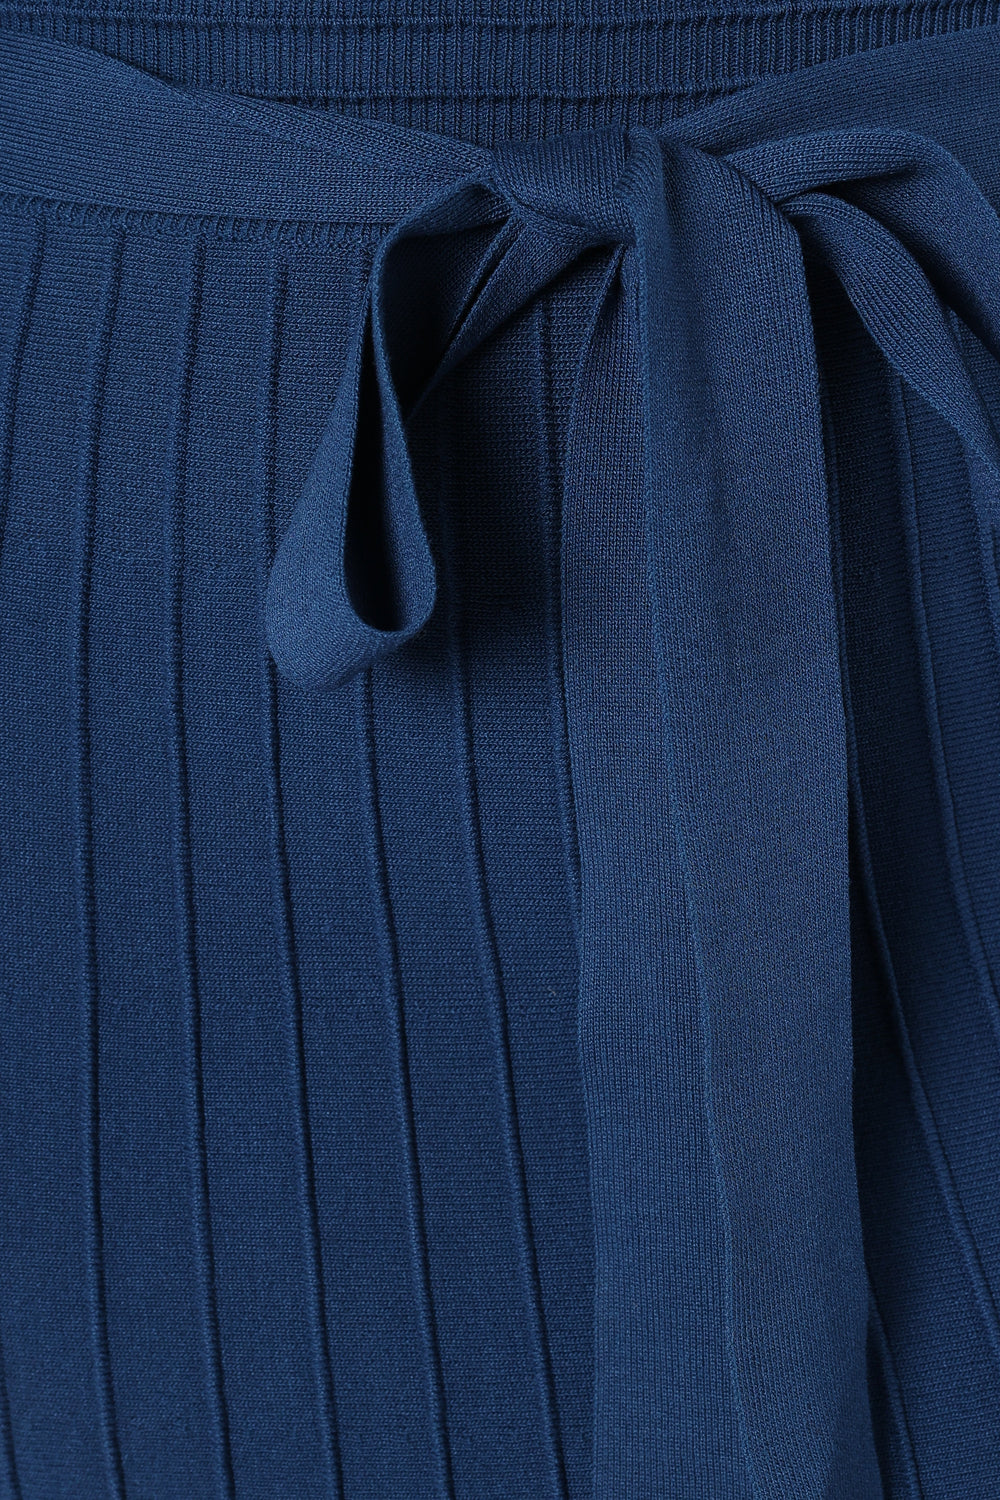 Petal and Pup USA DRESSES Lexi Long Sleeve Midi Dress - Blue